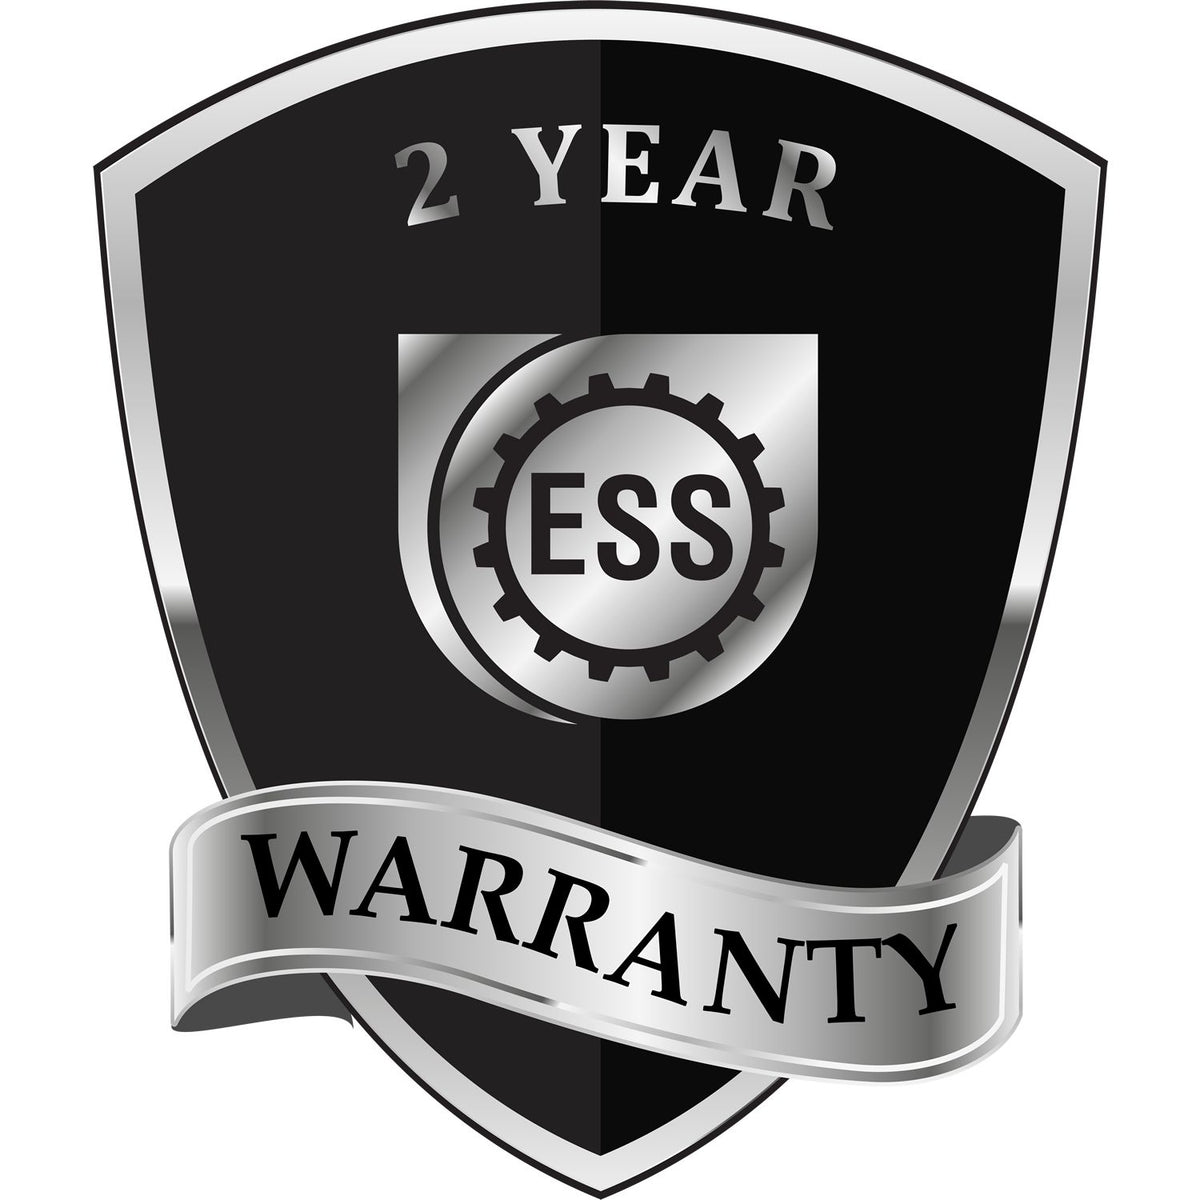 A badge or emblem showing a warranty icon for the Extended Long Reach Nebraska Surveyor Embosser